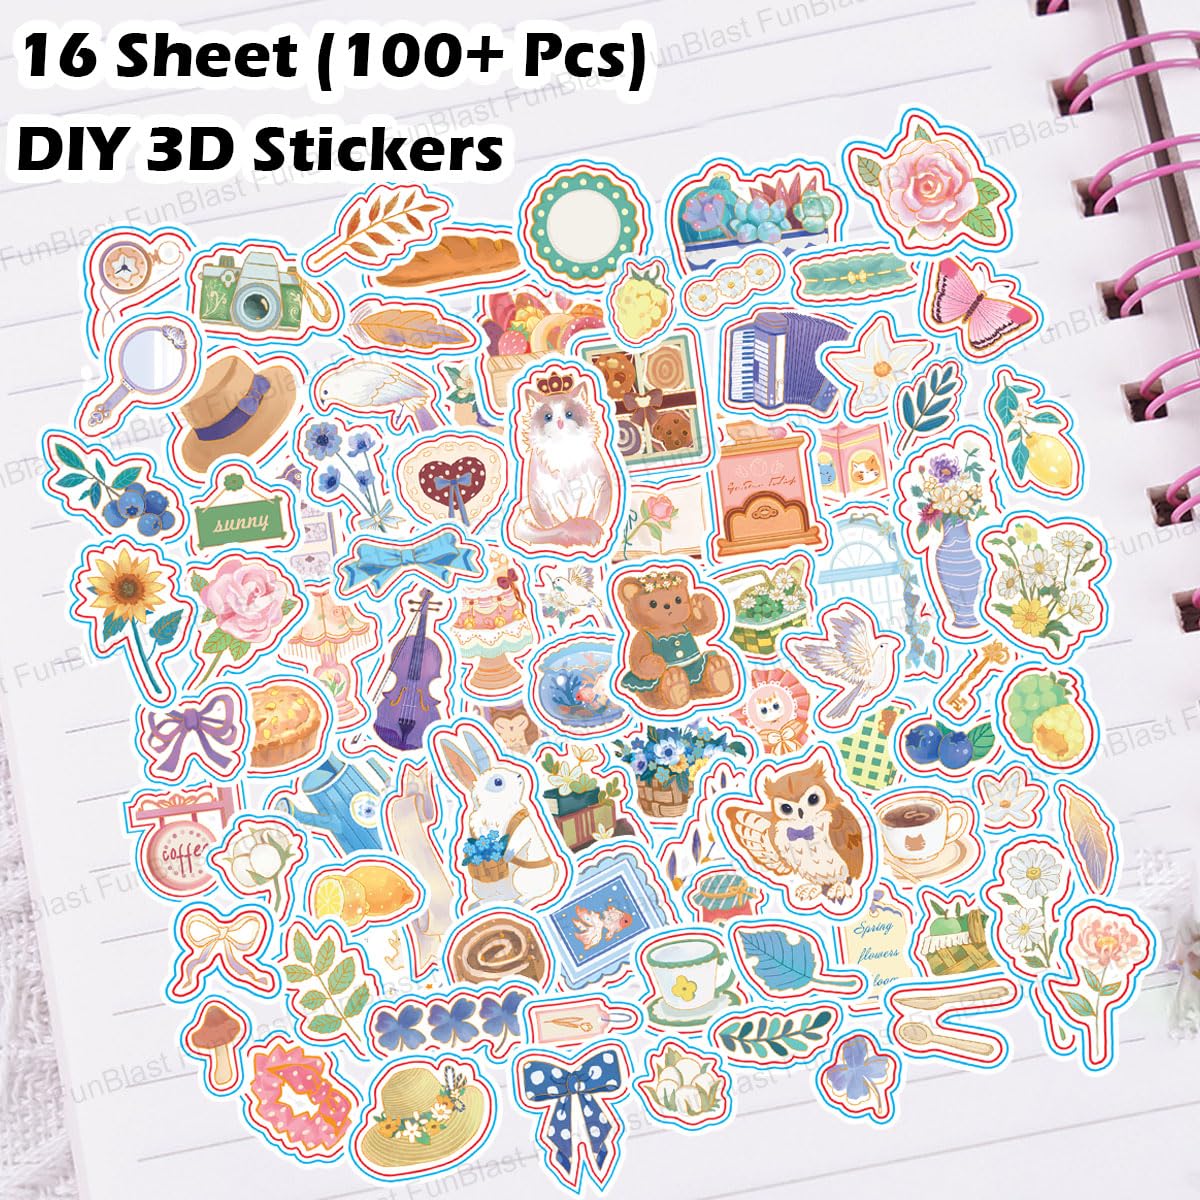 Kawaii Stickers Set – 16 Sheet (100+ Pcs) DIY 3D Stickers for Girls, Aesthetic Sticker, Stickers for Journaling, Scrapbooking, Cute Stickers Set (Cute Animals 4x4=16 Sheets)